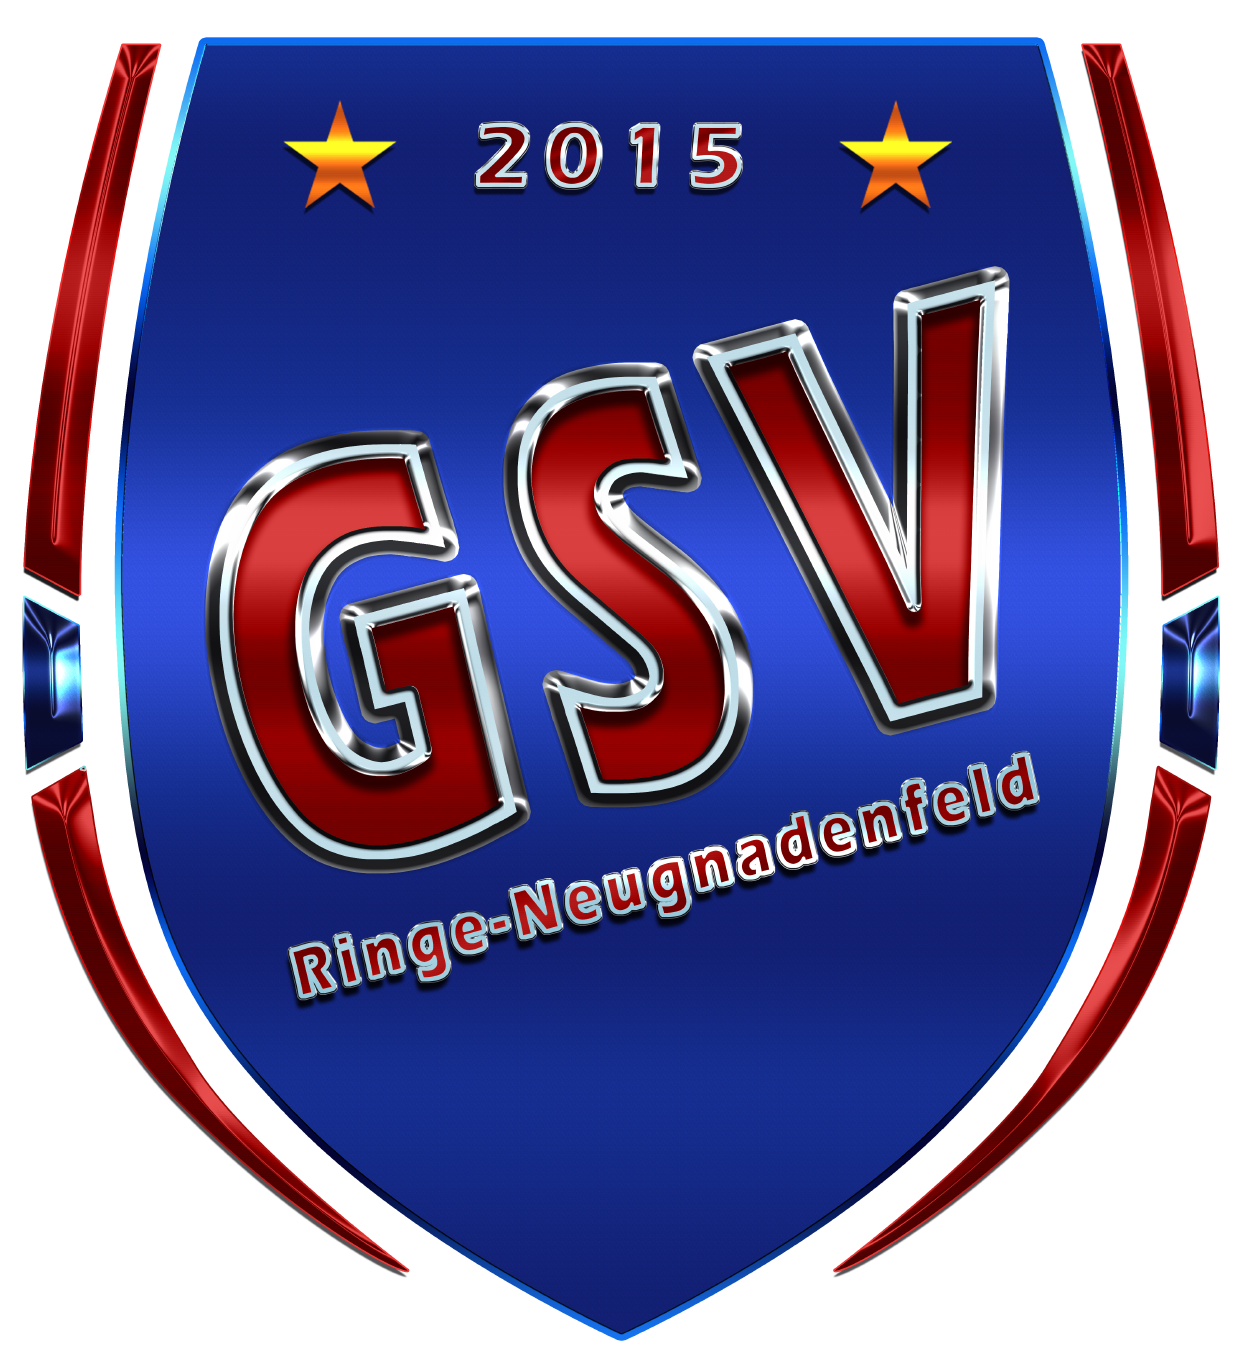 GSV Ringe-Neugnadenfeld 2015